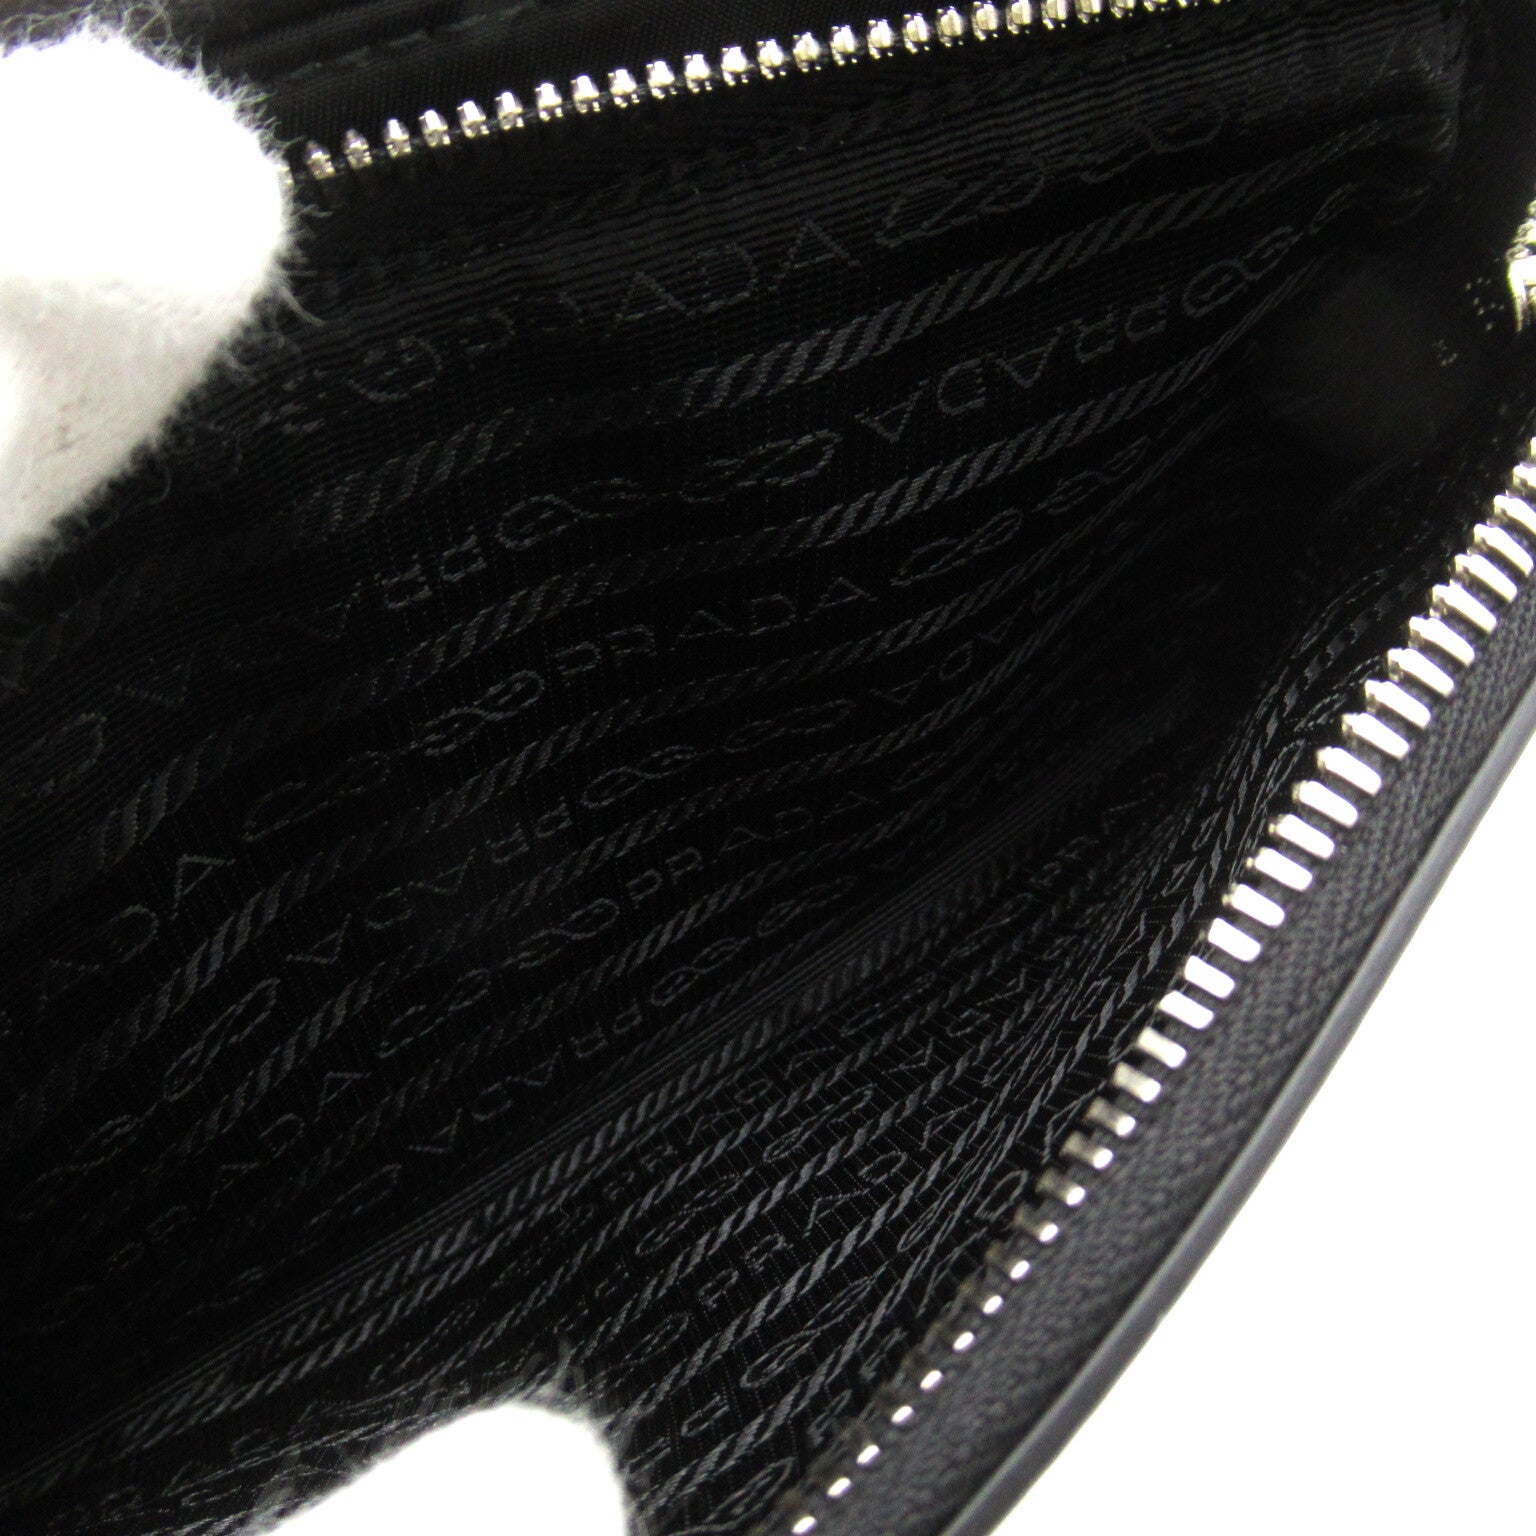 Prada Waist Bag Body Bag Body Bag Body Bag Nylon Leather   Black 2VH156789F0002